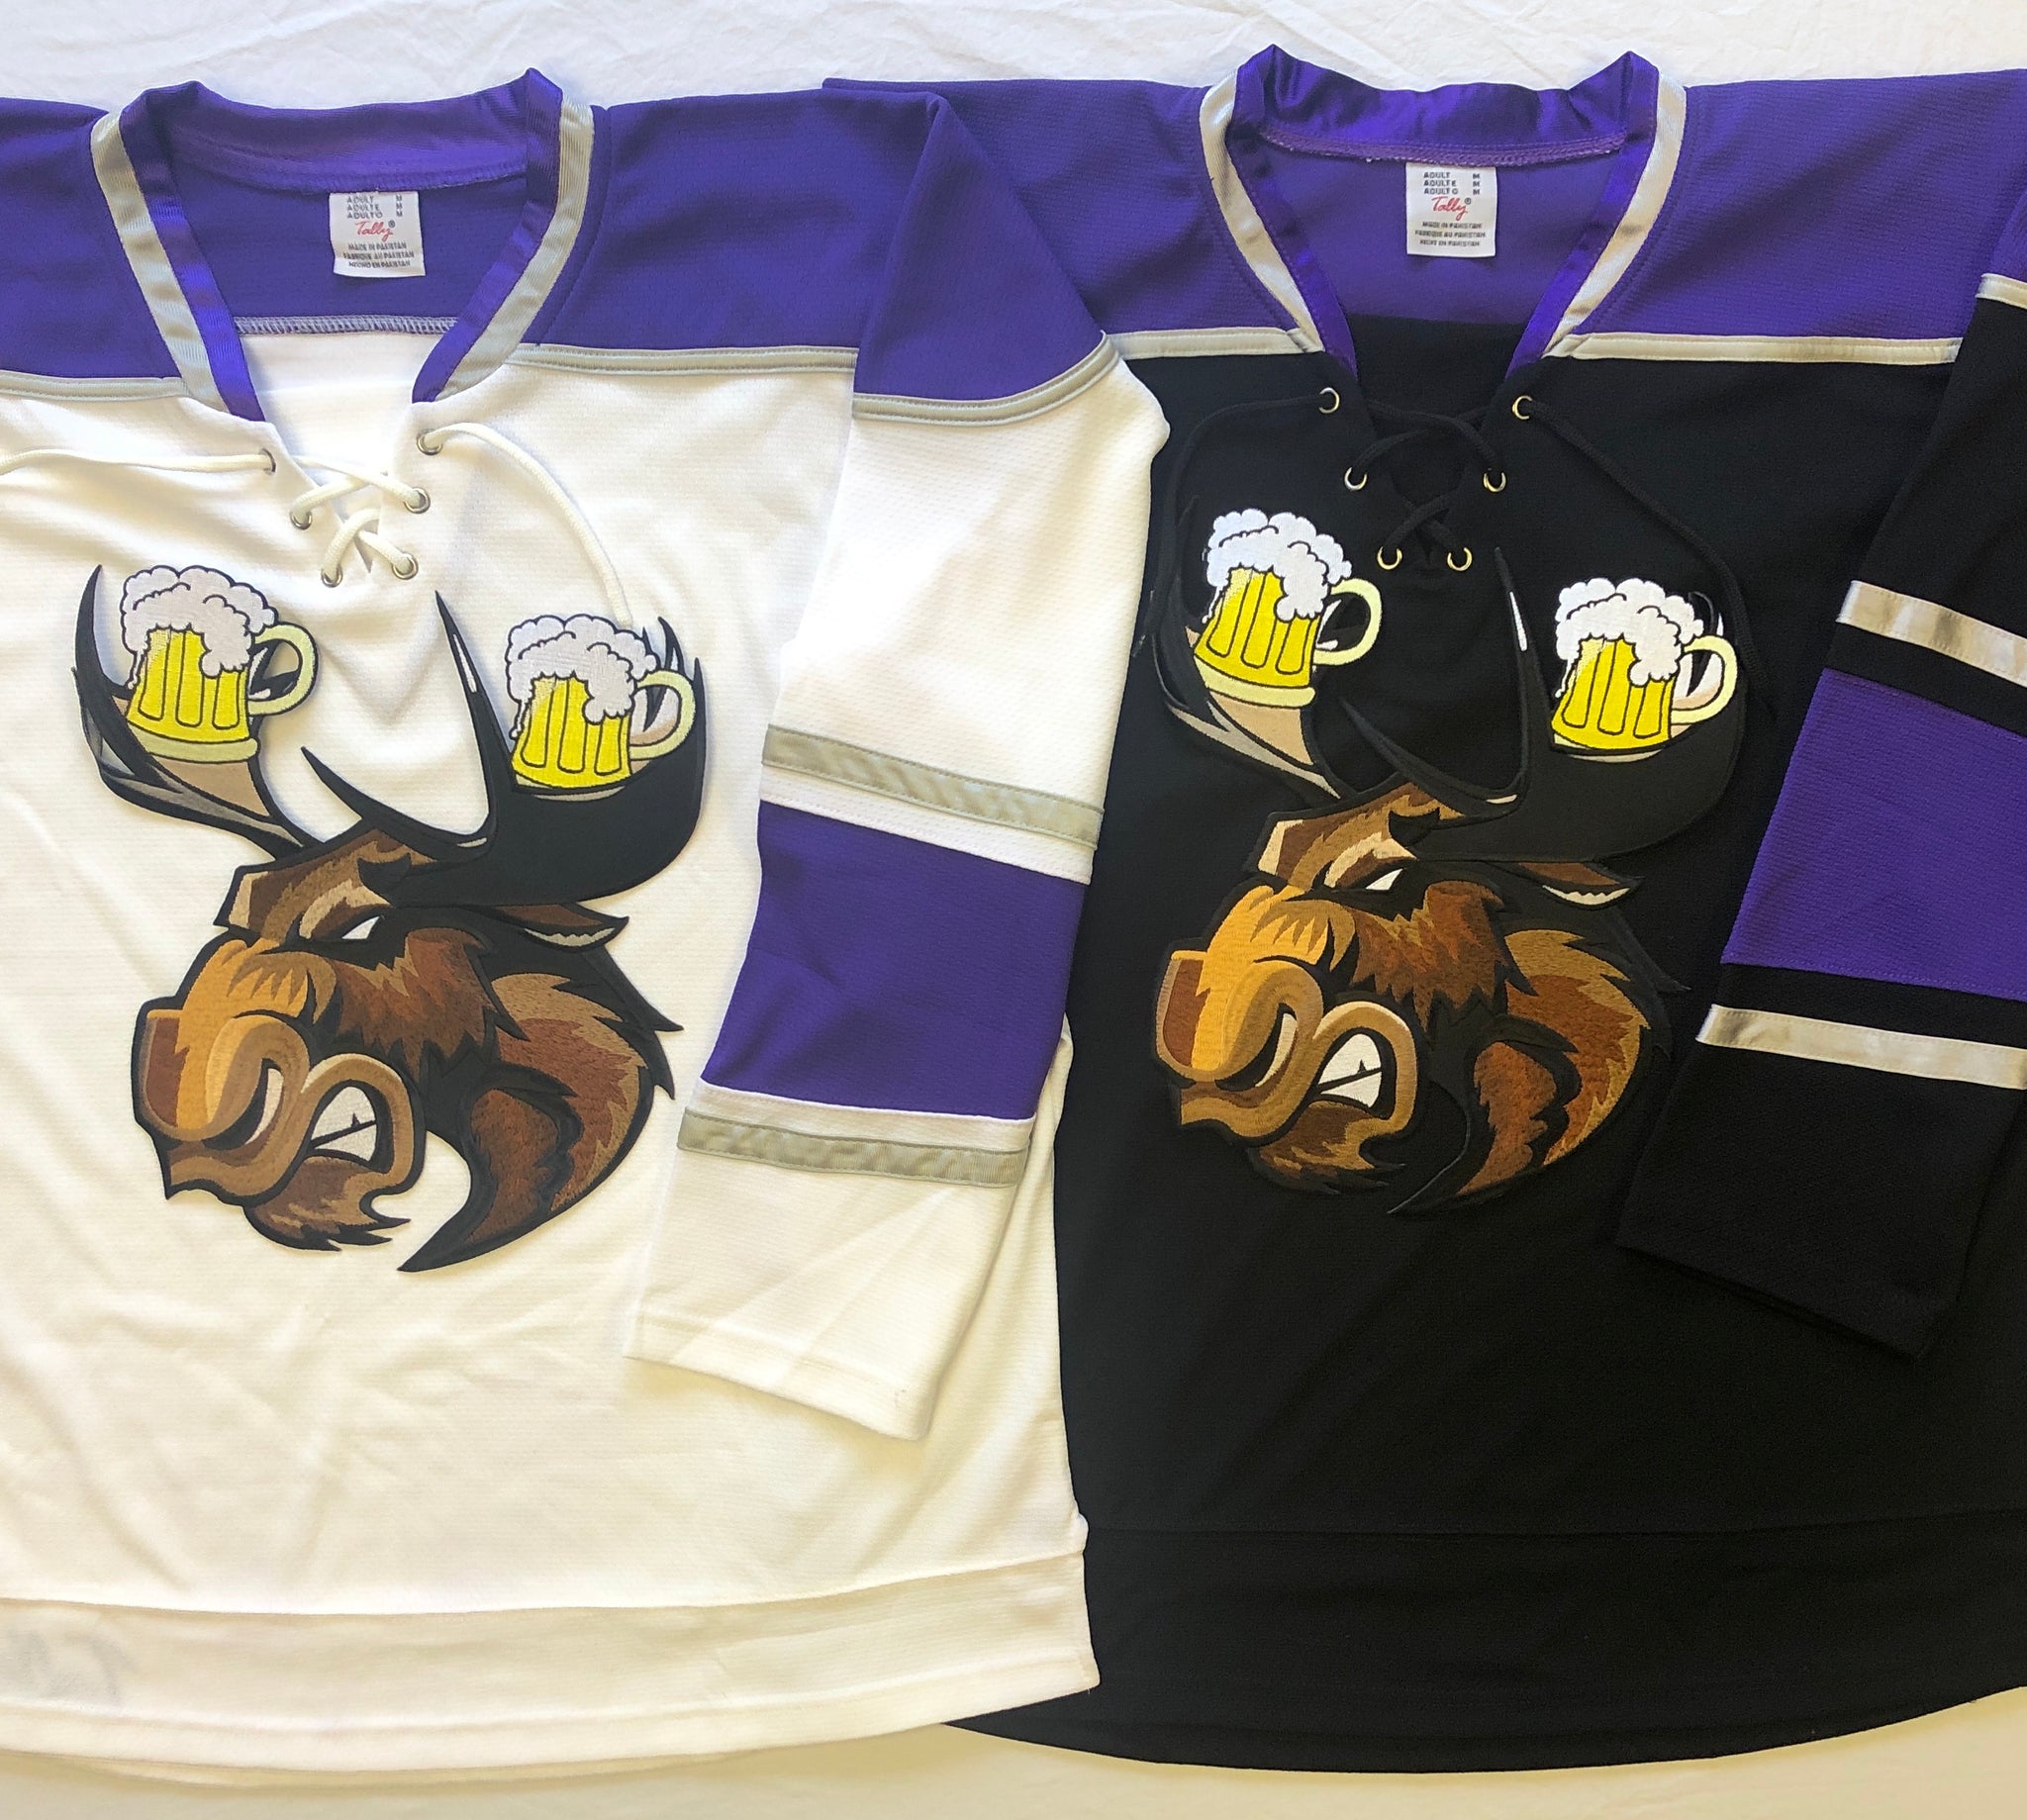 Manitoba Moose Minor Hockey League Fan Apparel/Souvenirs for sale